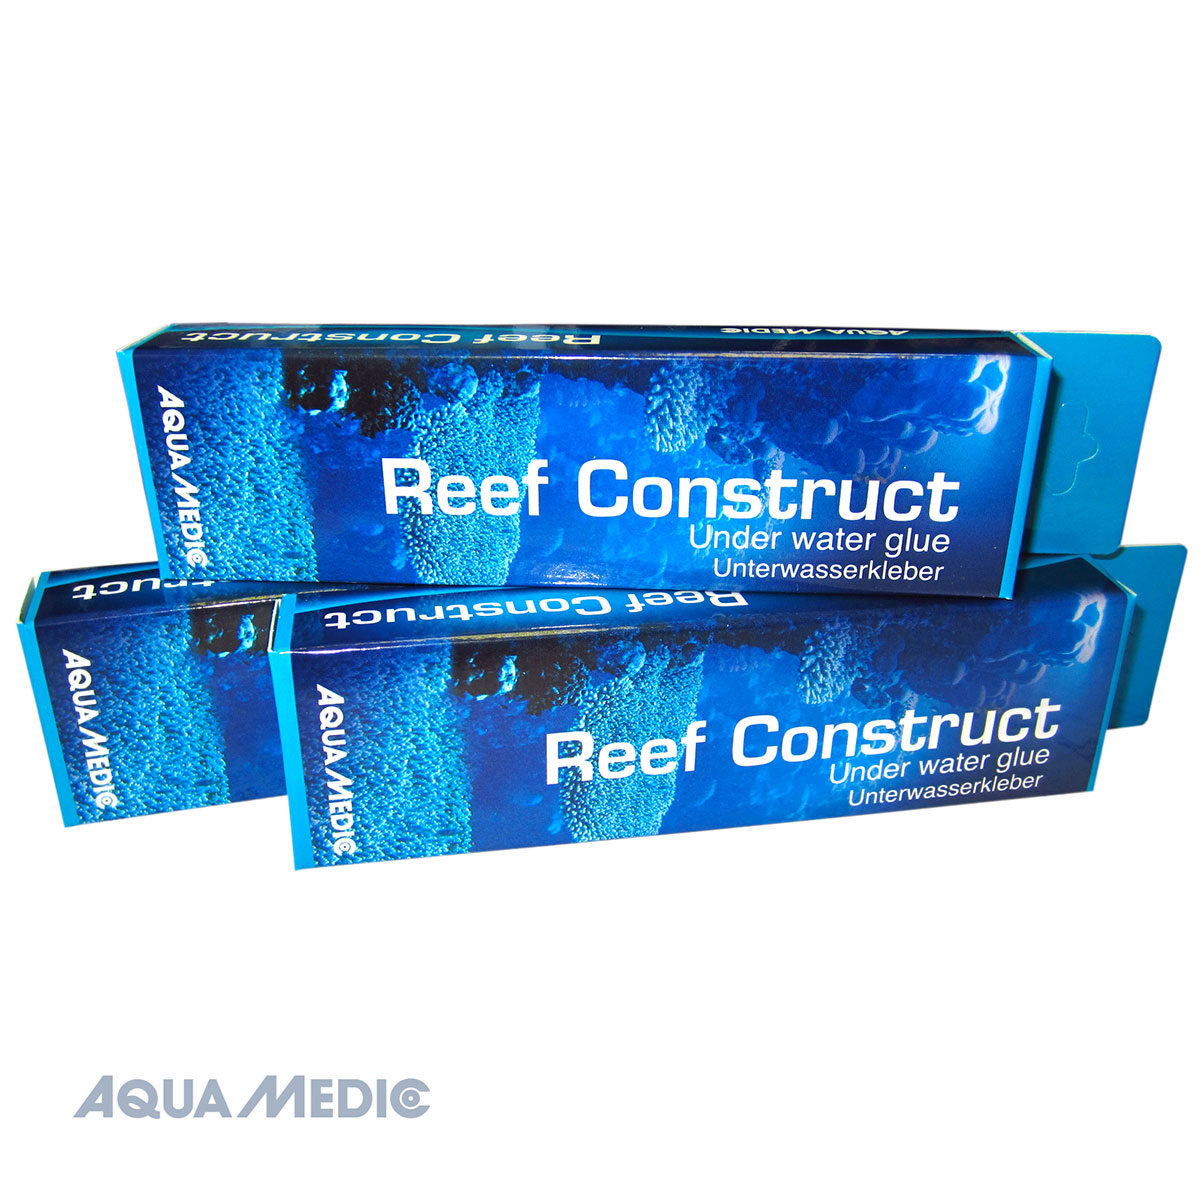 Aqua Medic lepidlo na korály Reef Construct 2× 56 g